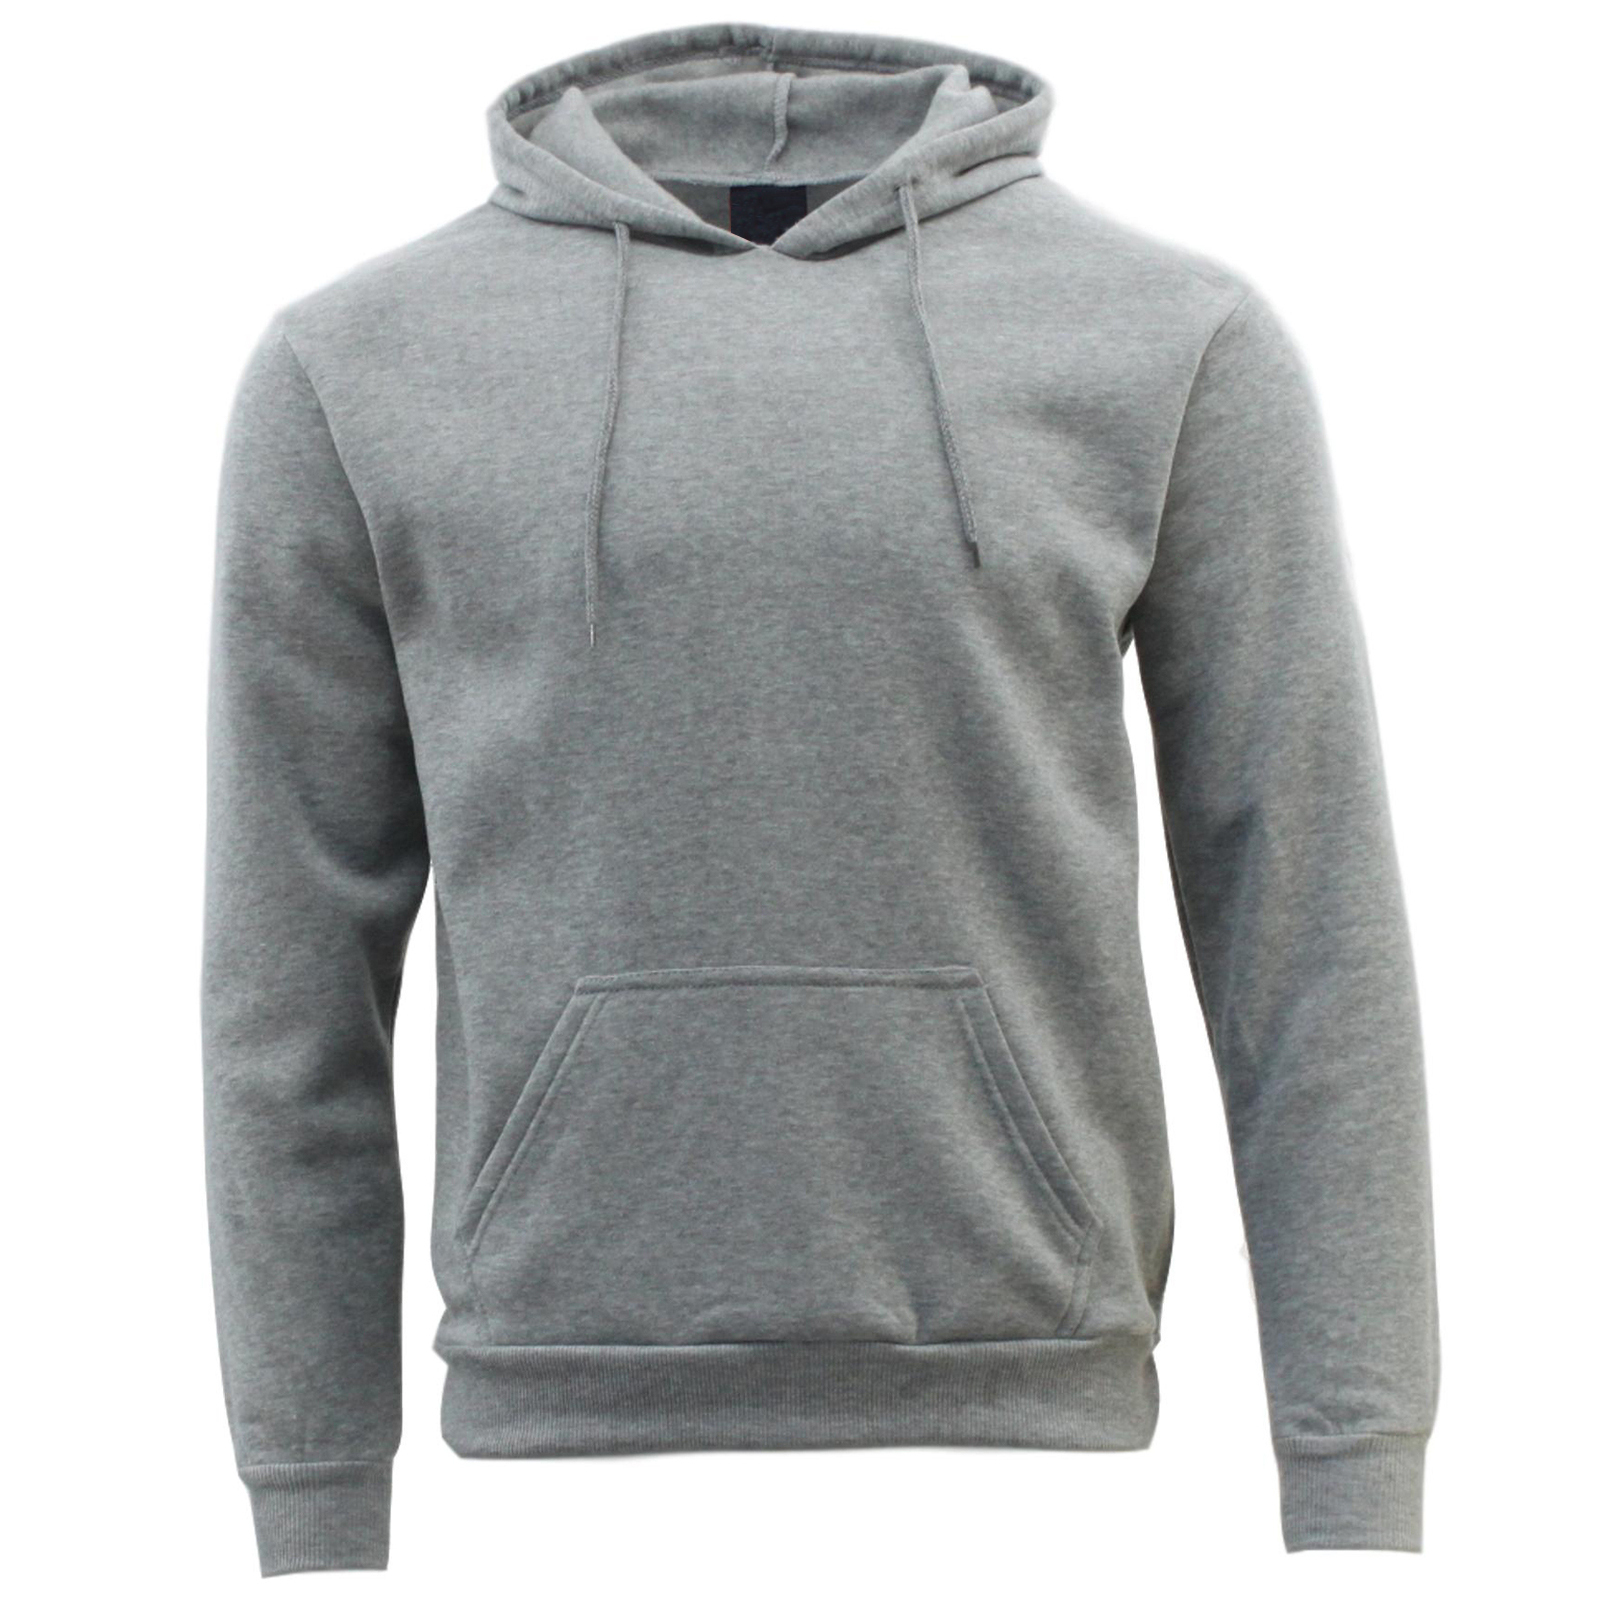 Adult Men's Unisex Basic Plain Hoodie Jumper Pullover Sweater